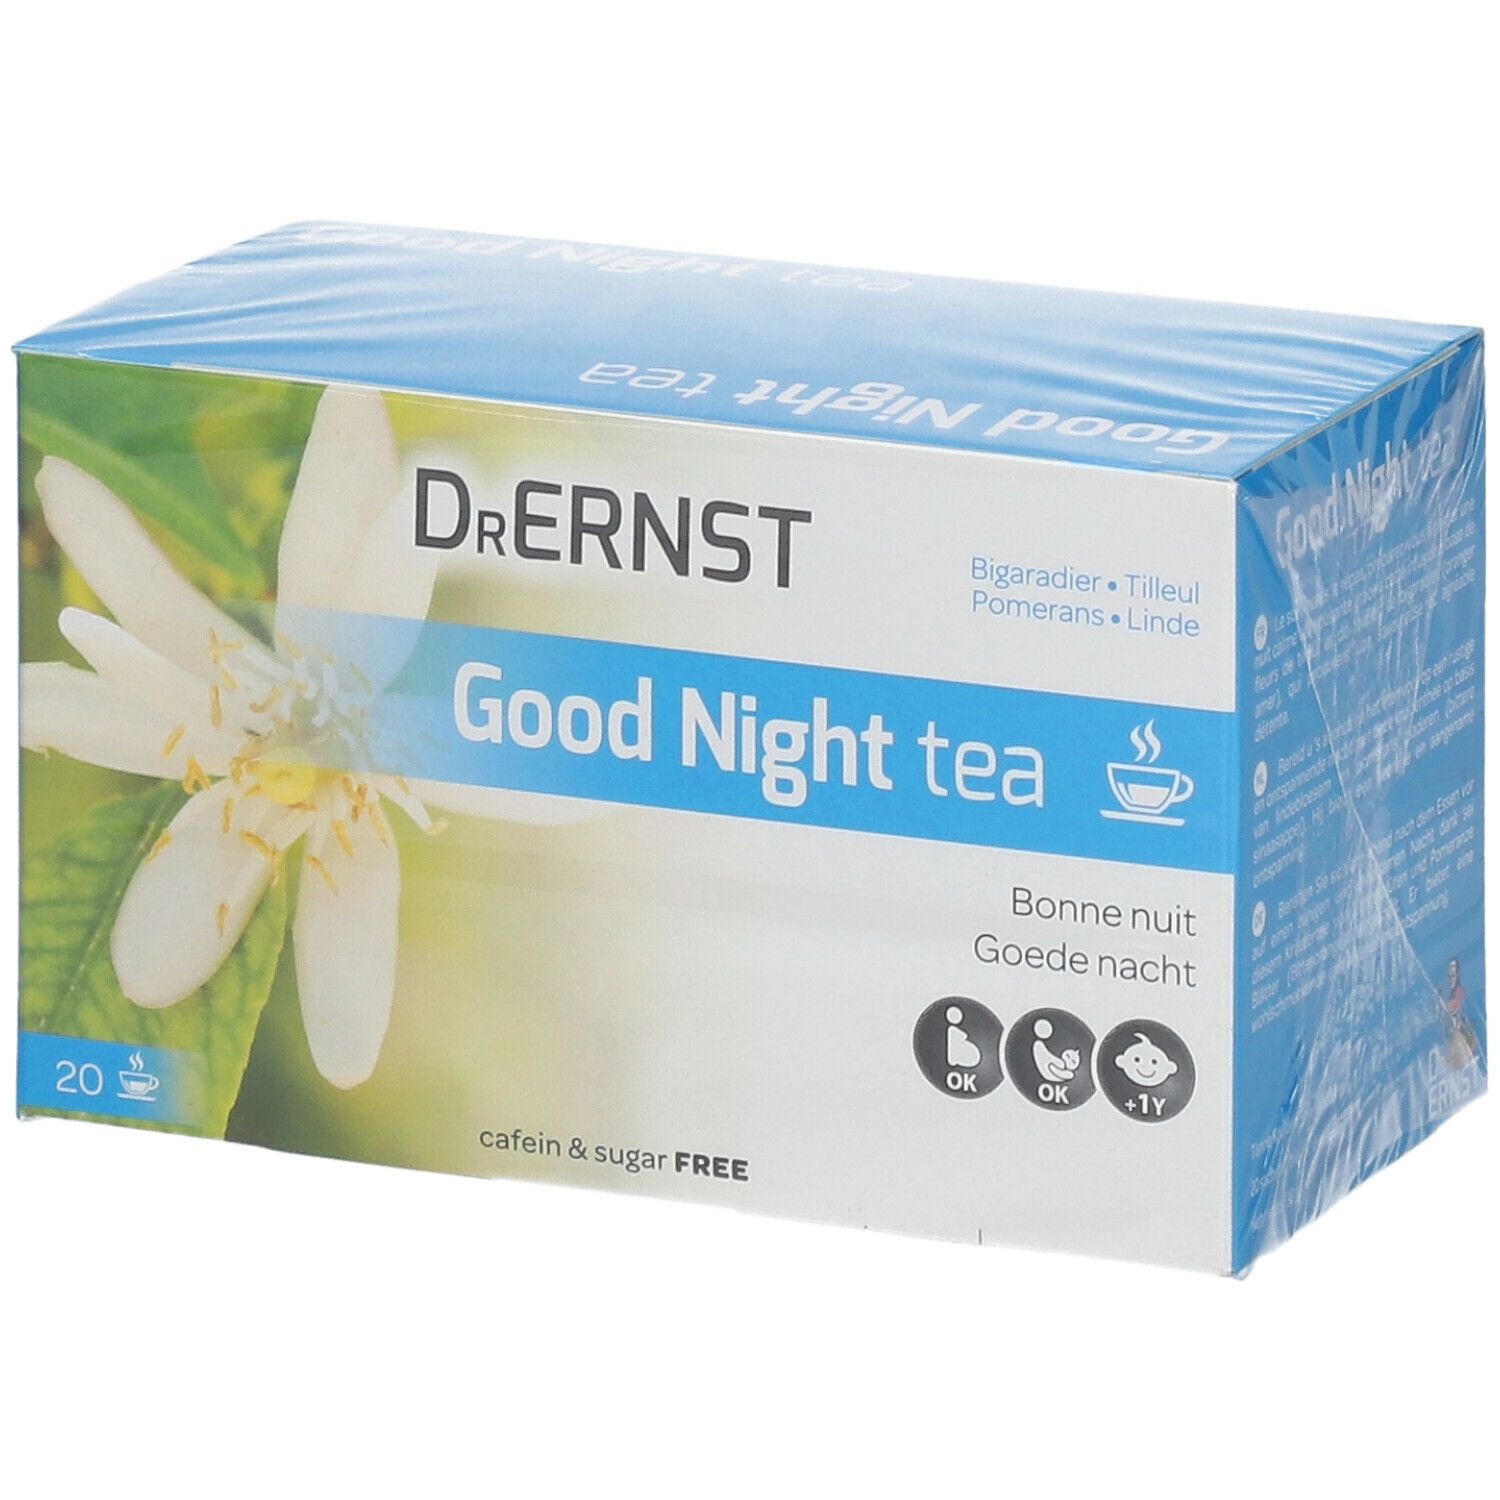 Dr Ernst Good Night Tea